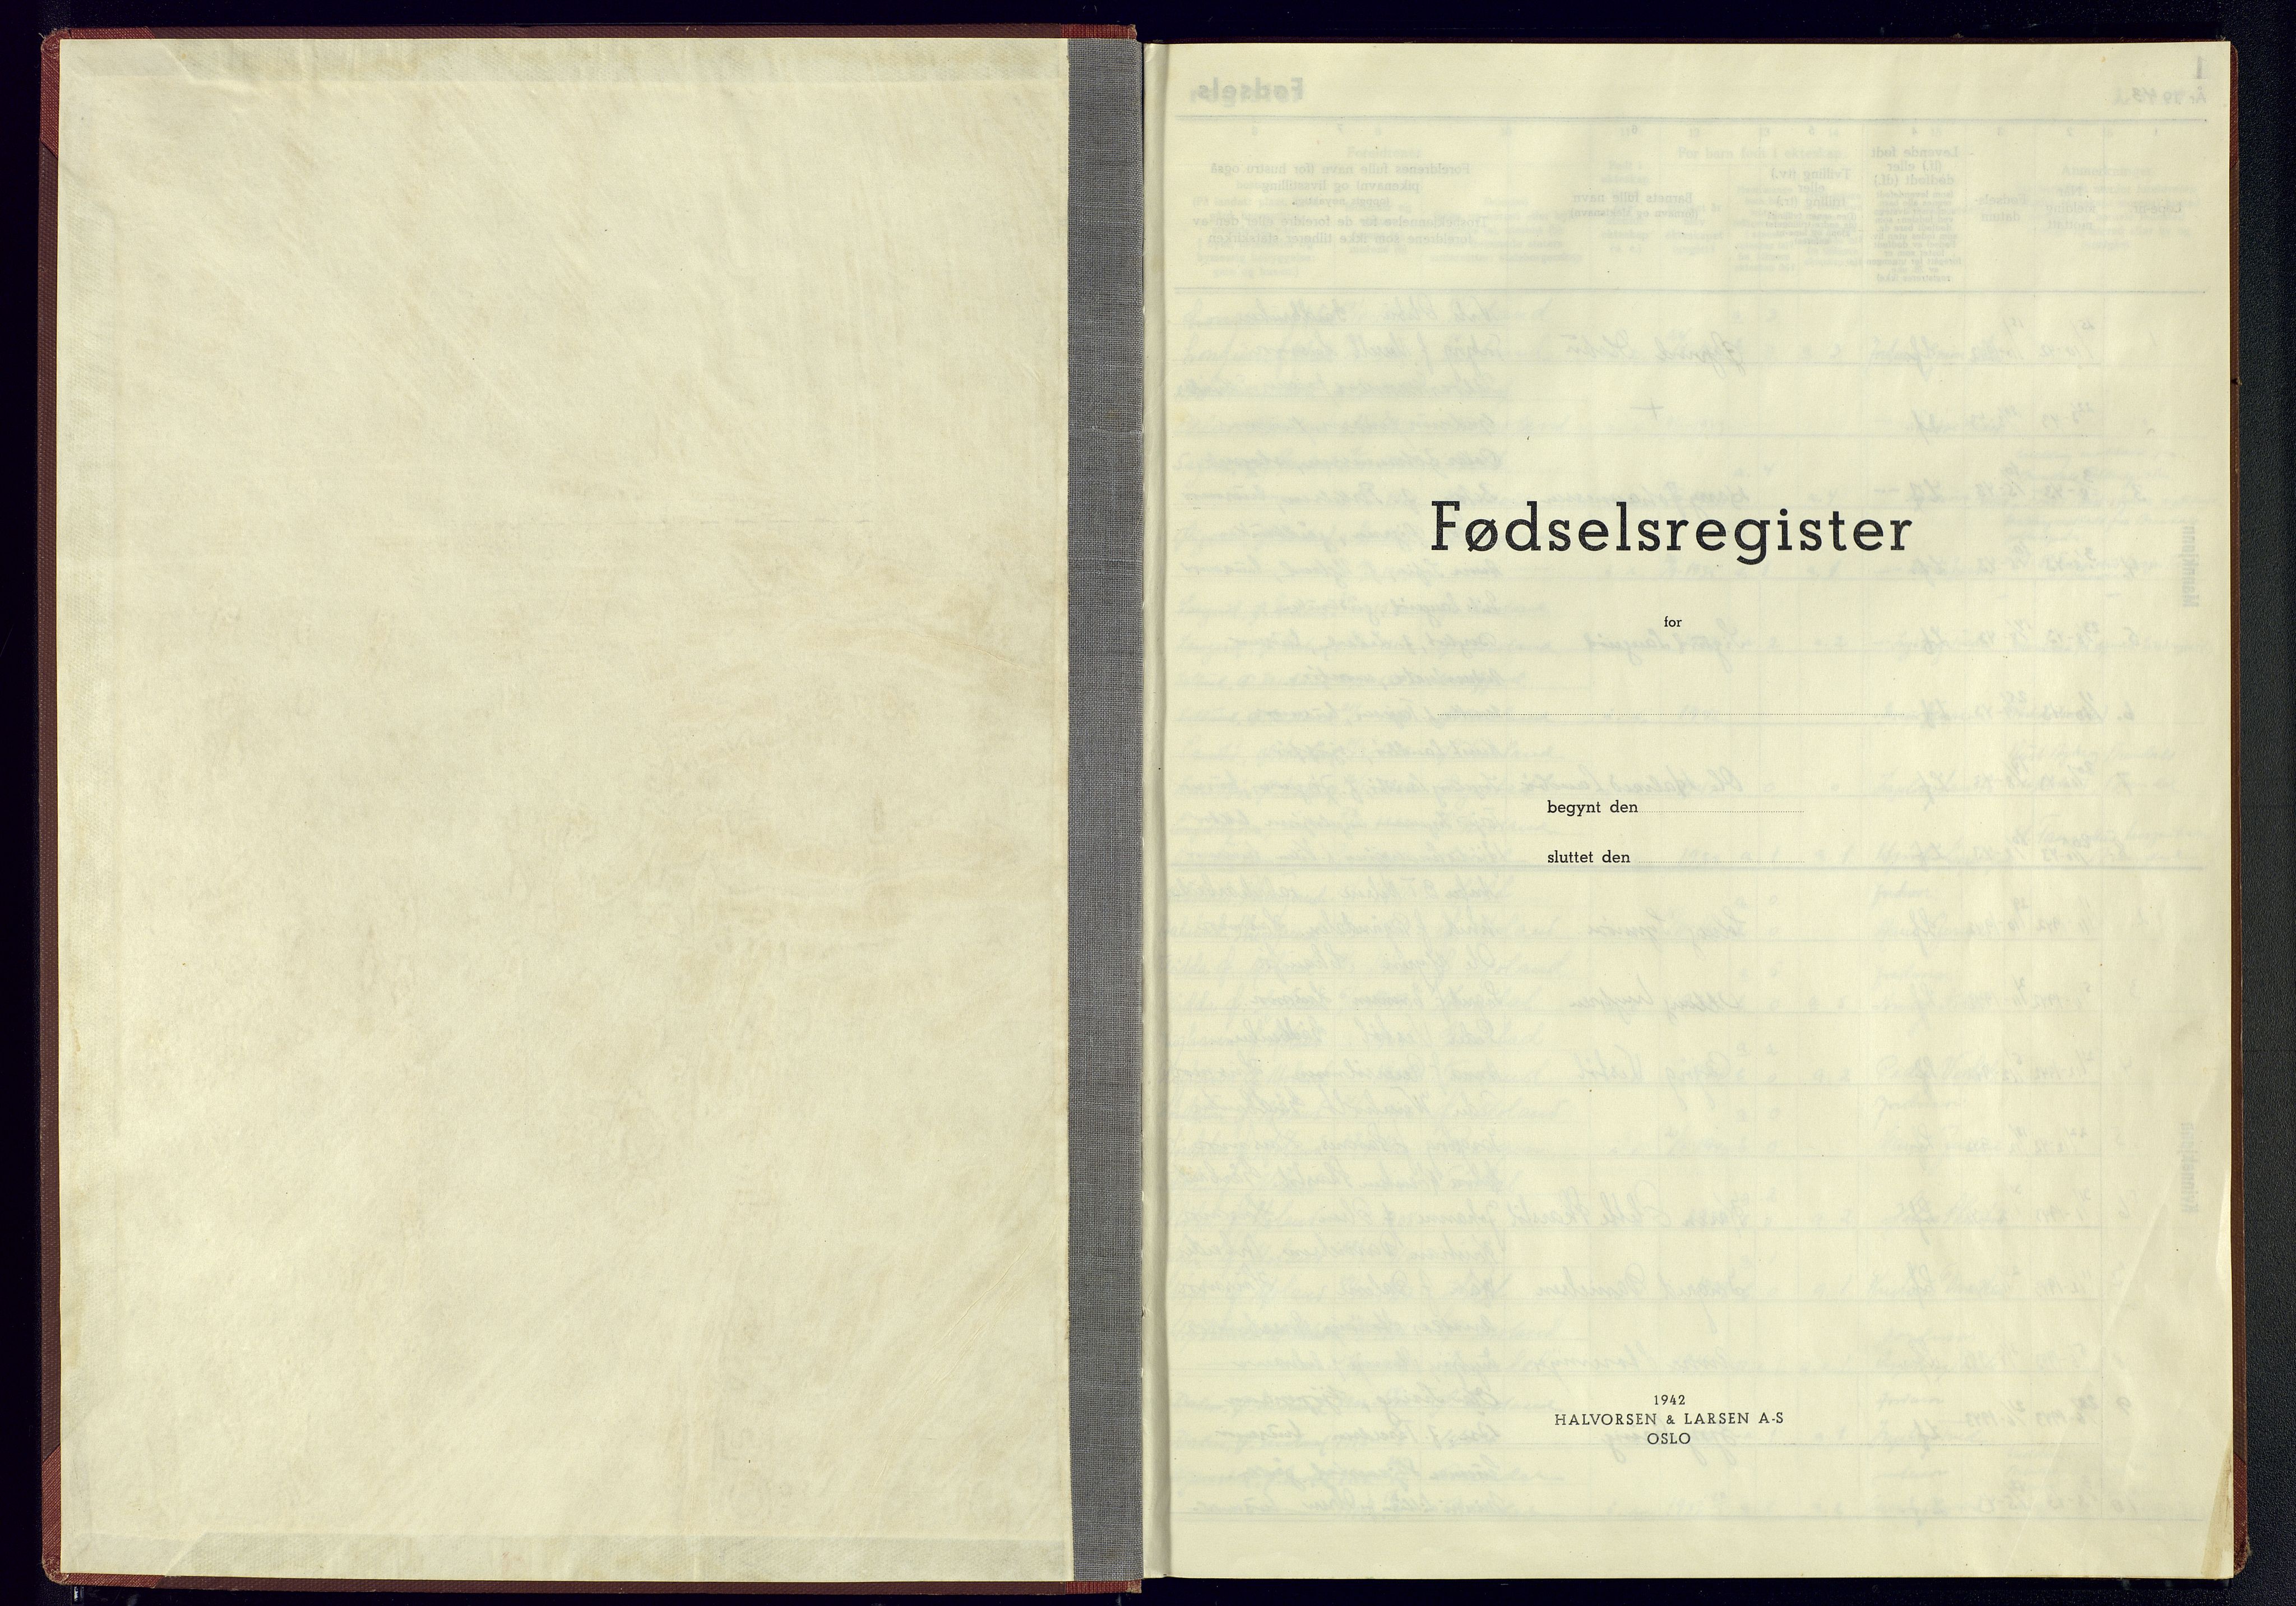 Austre Moland sokneprestkontor, SAK/1111-0001/J/Jb/L0002: Fødselsregister nr. A-VI-18, 1943-1945